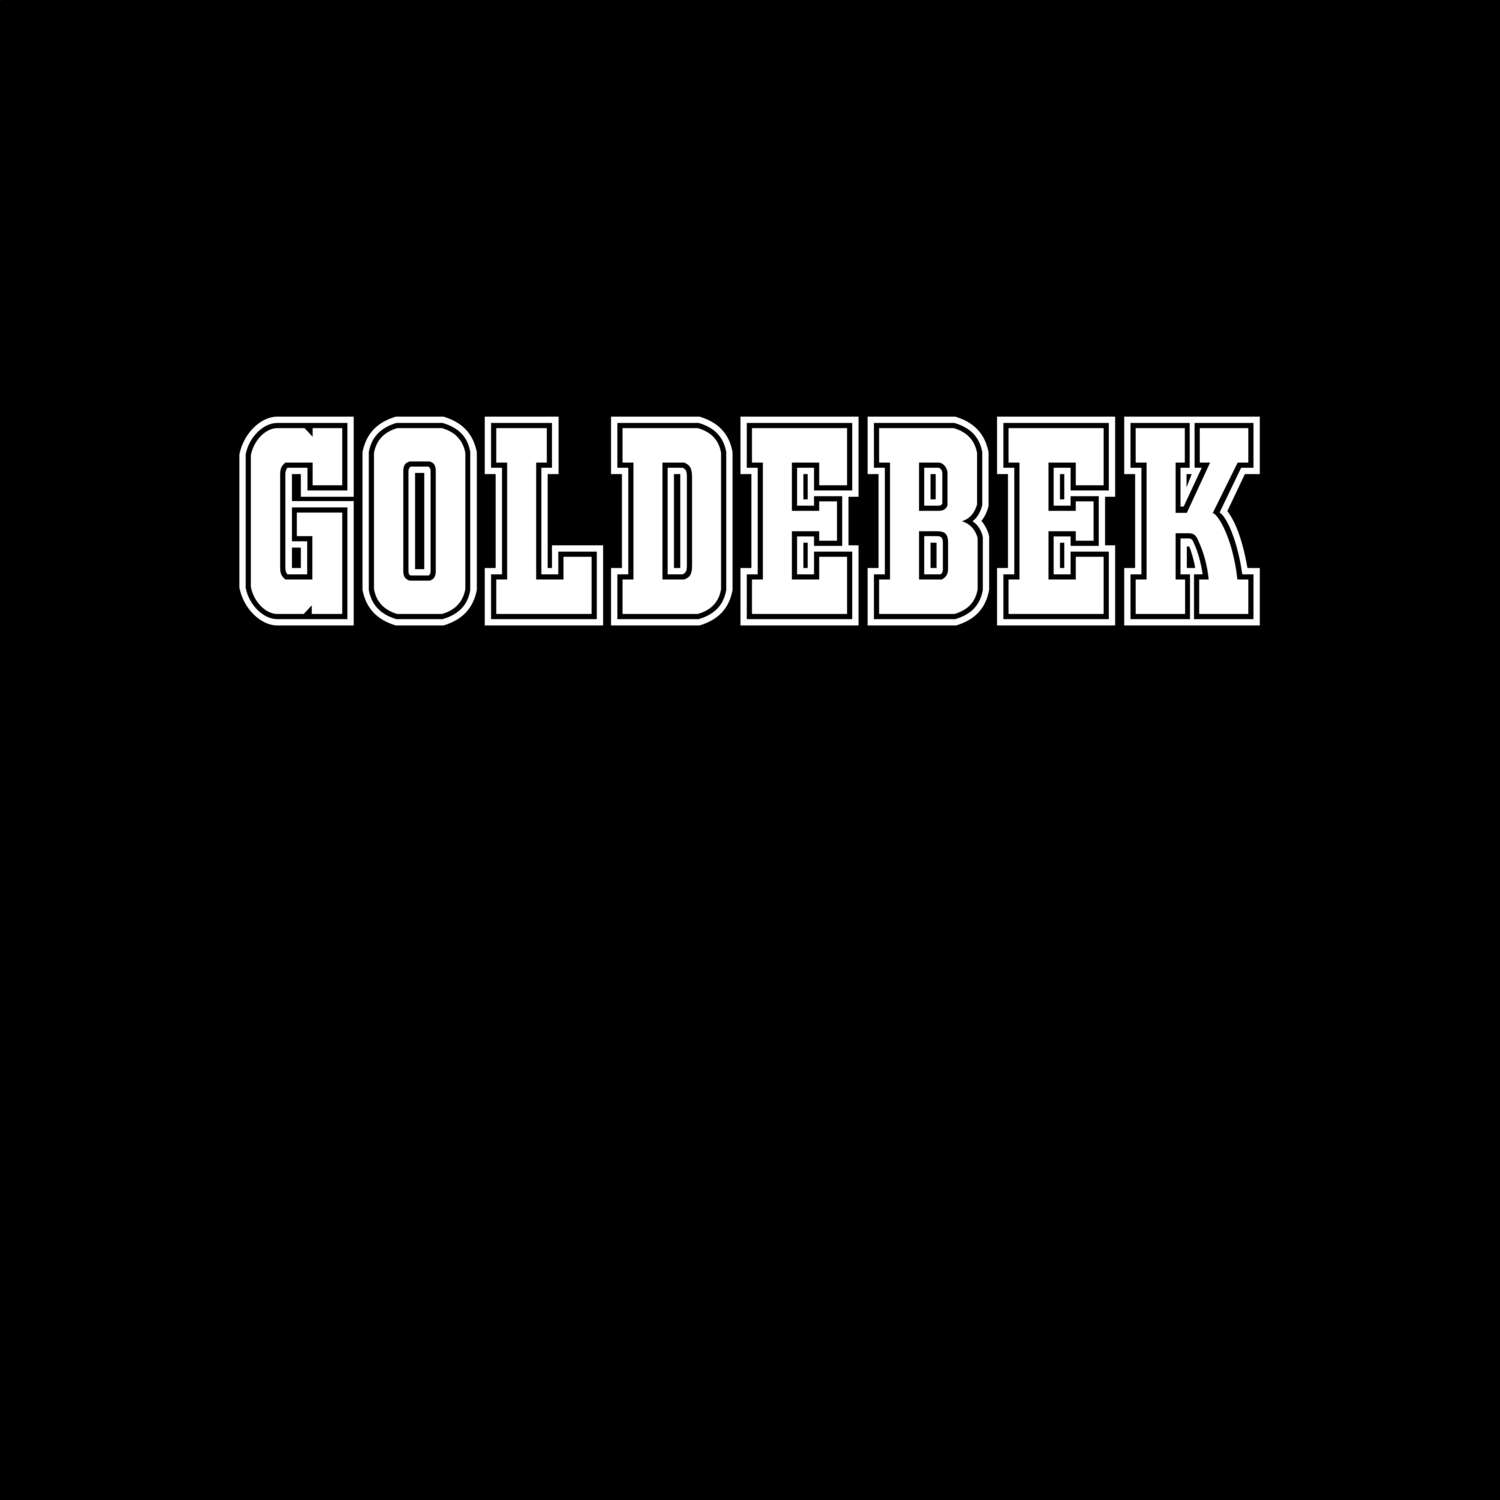 Goldebek T-Shirt »Classic«